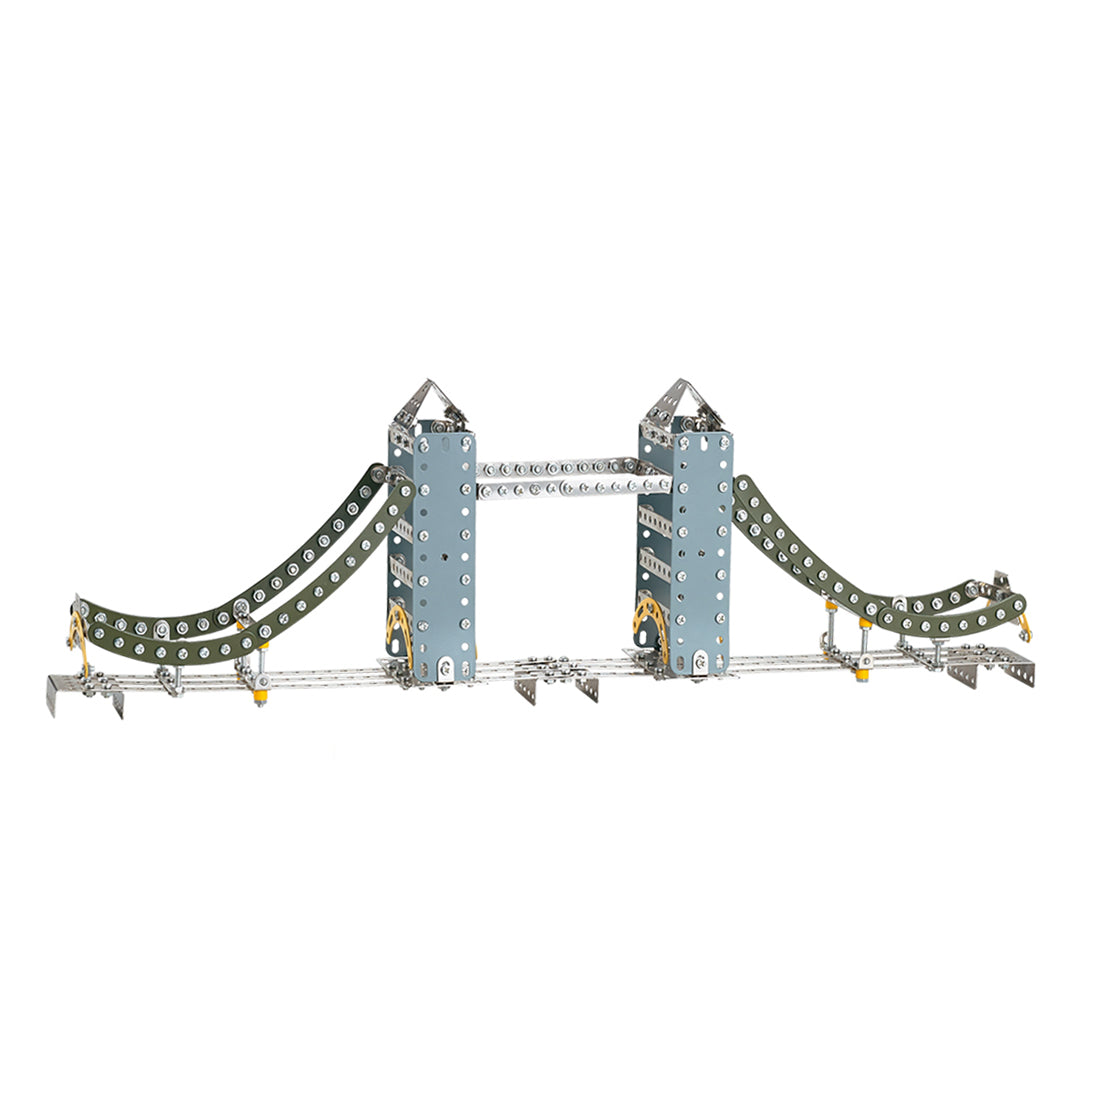 DIY Metal 3D Tower of London Bridge Model Kit Assembly